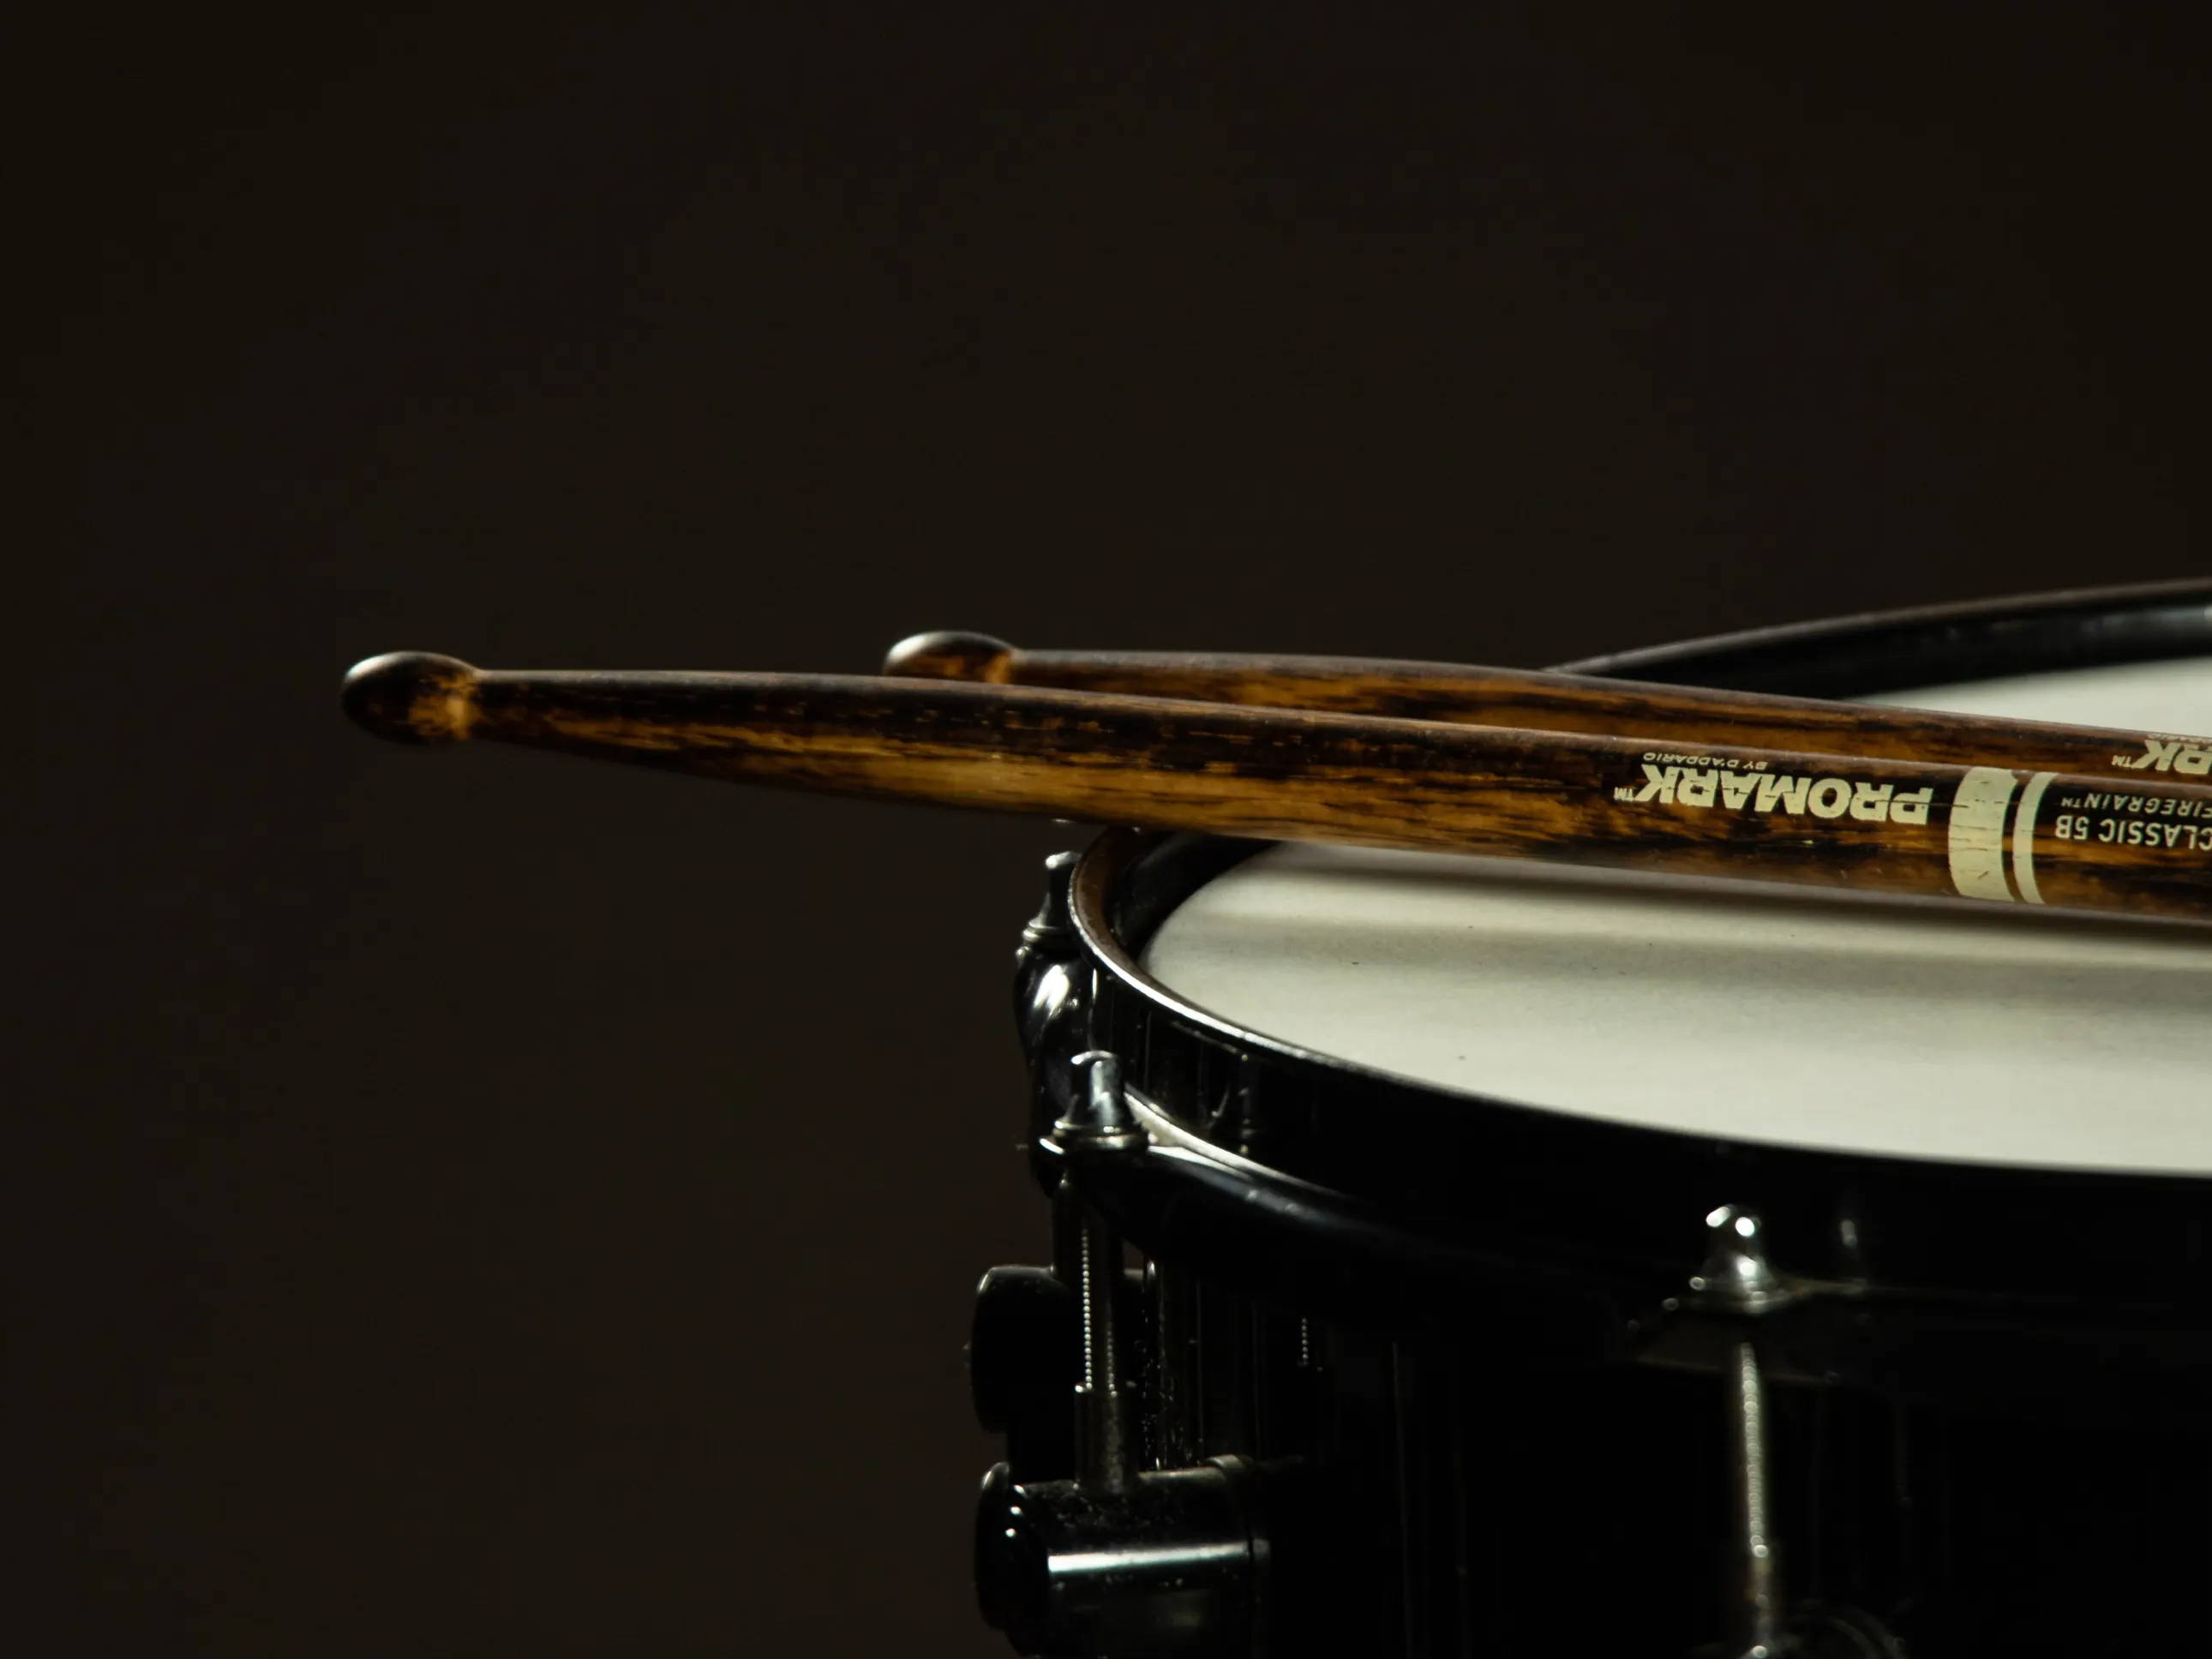 Drumsticks resting on a snare drum